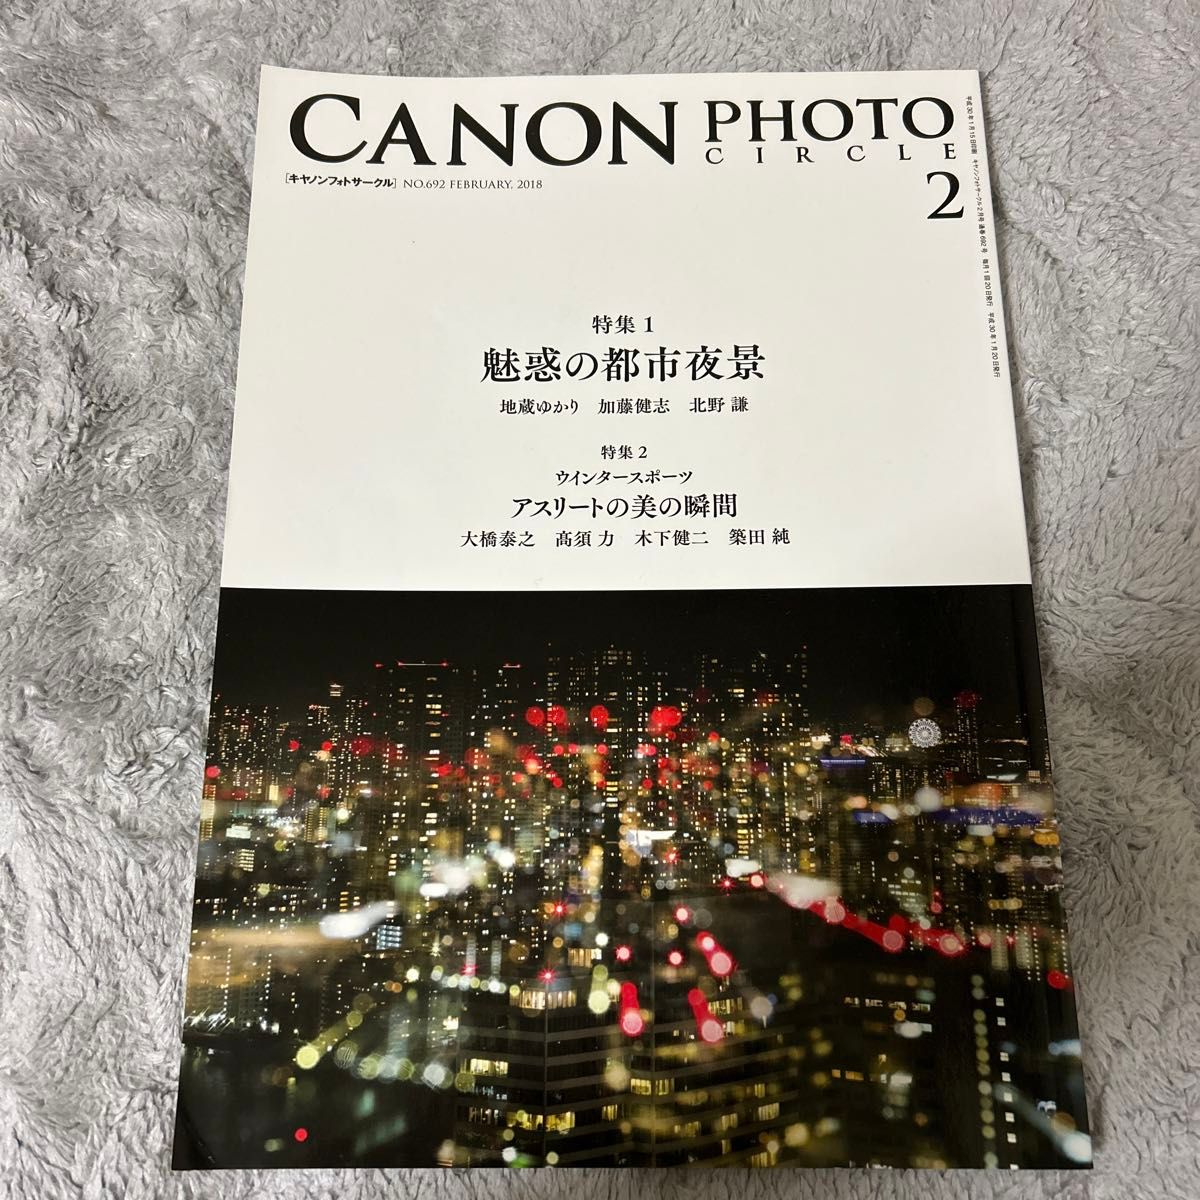 Canon Photo Circle No.692 February 2018